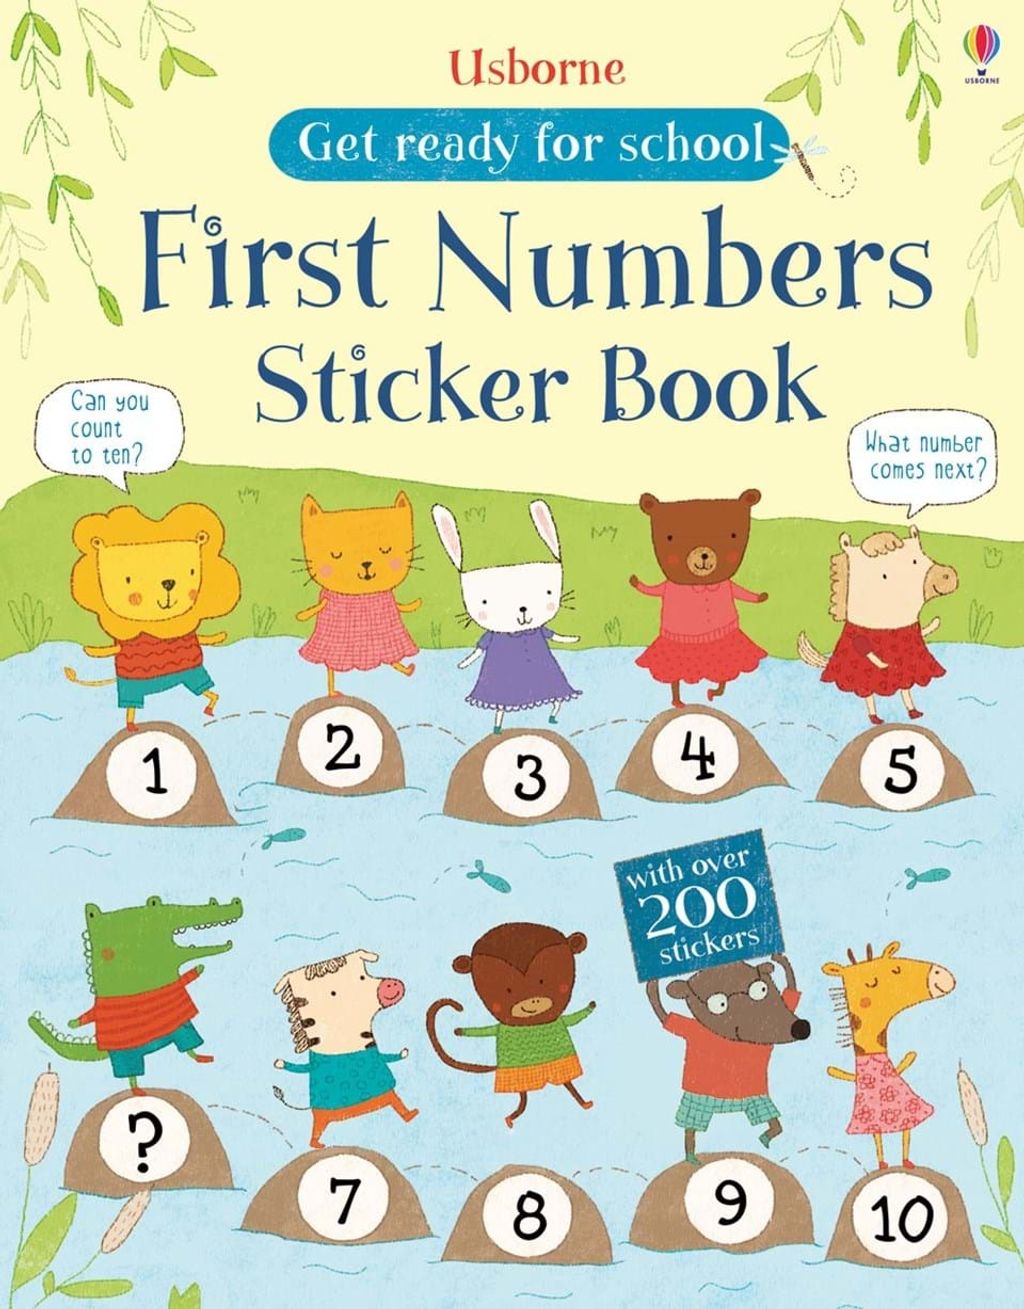 First Number Sticker Book.jpg